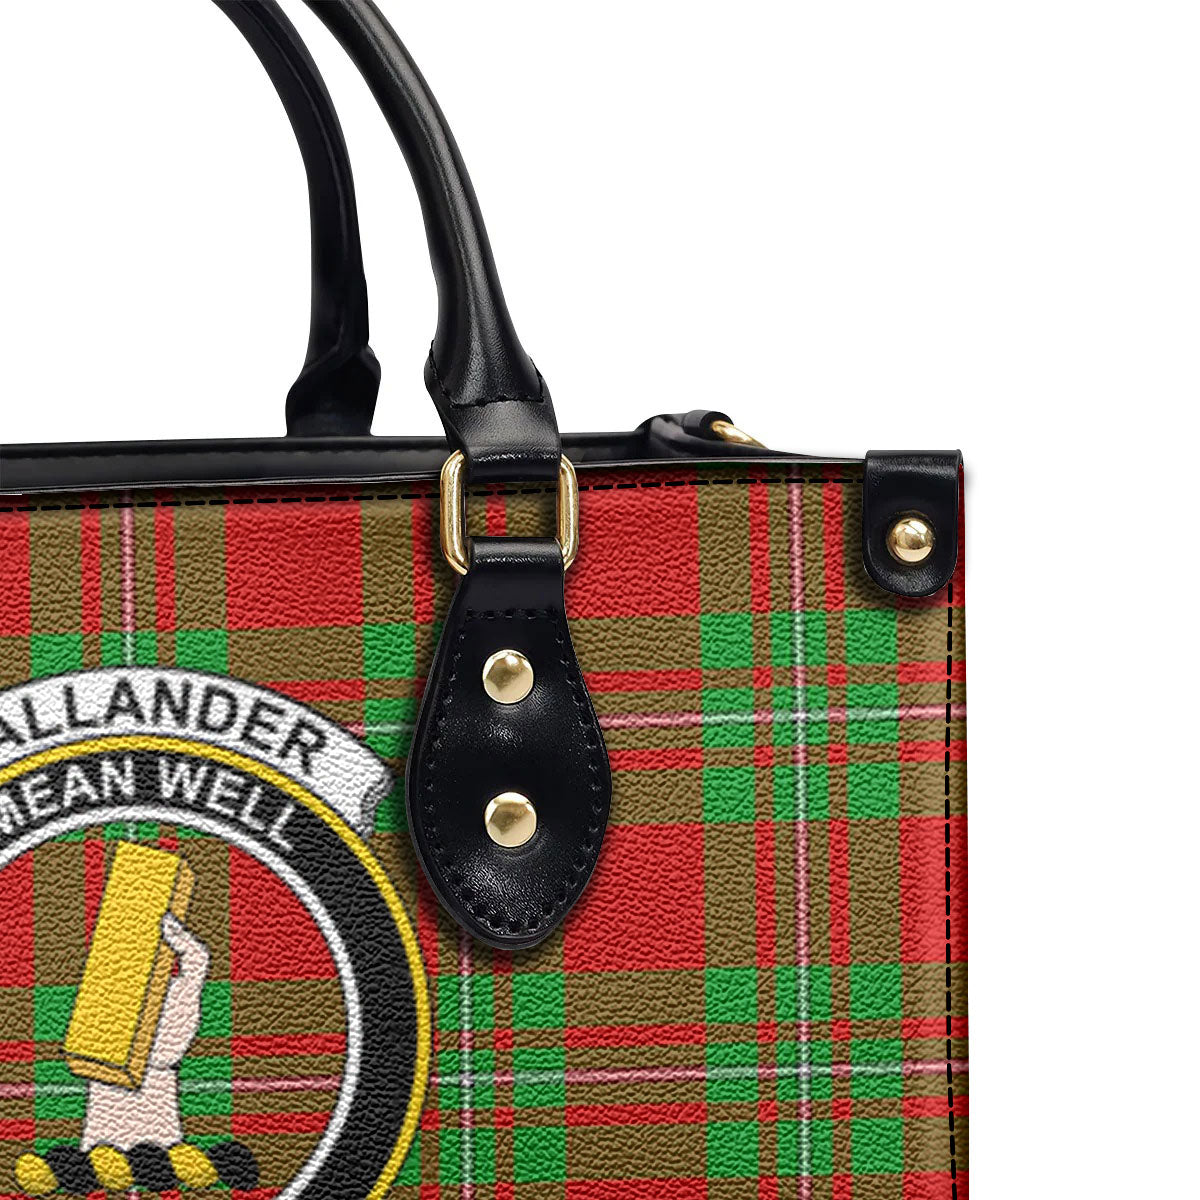 Callander Tartan Crest Leather Handbag